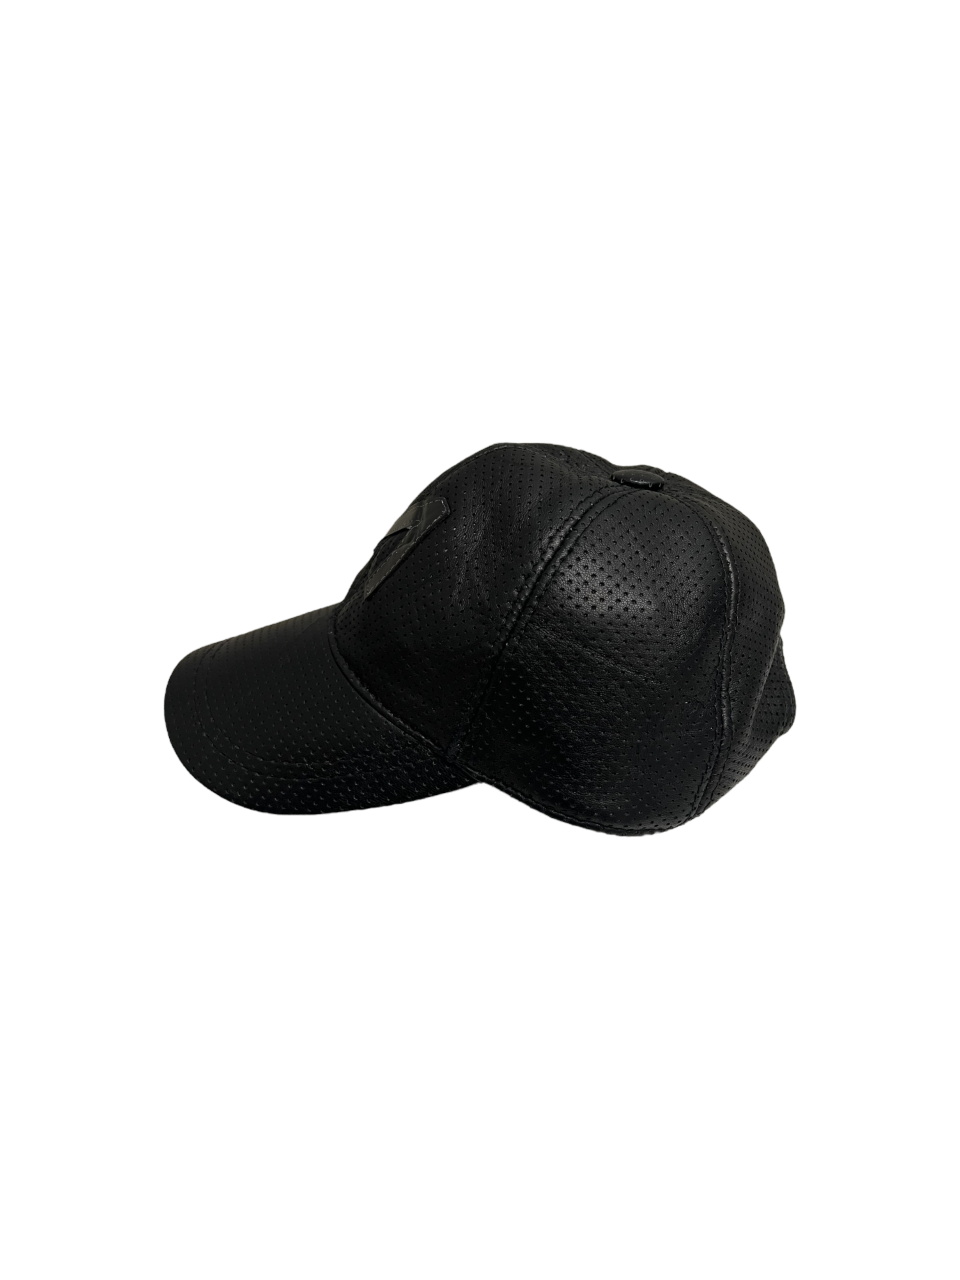 Apoli Perforated Black hat black logo